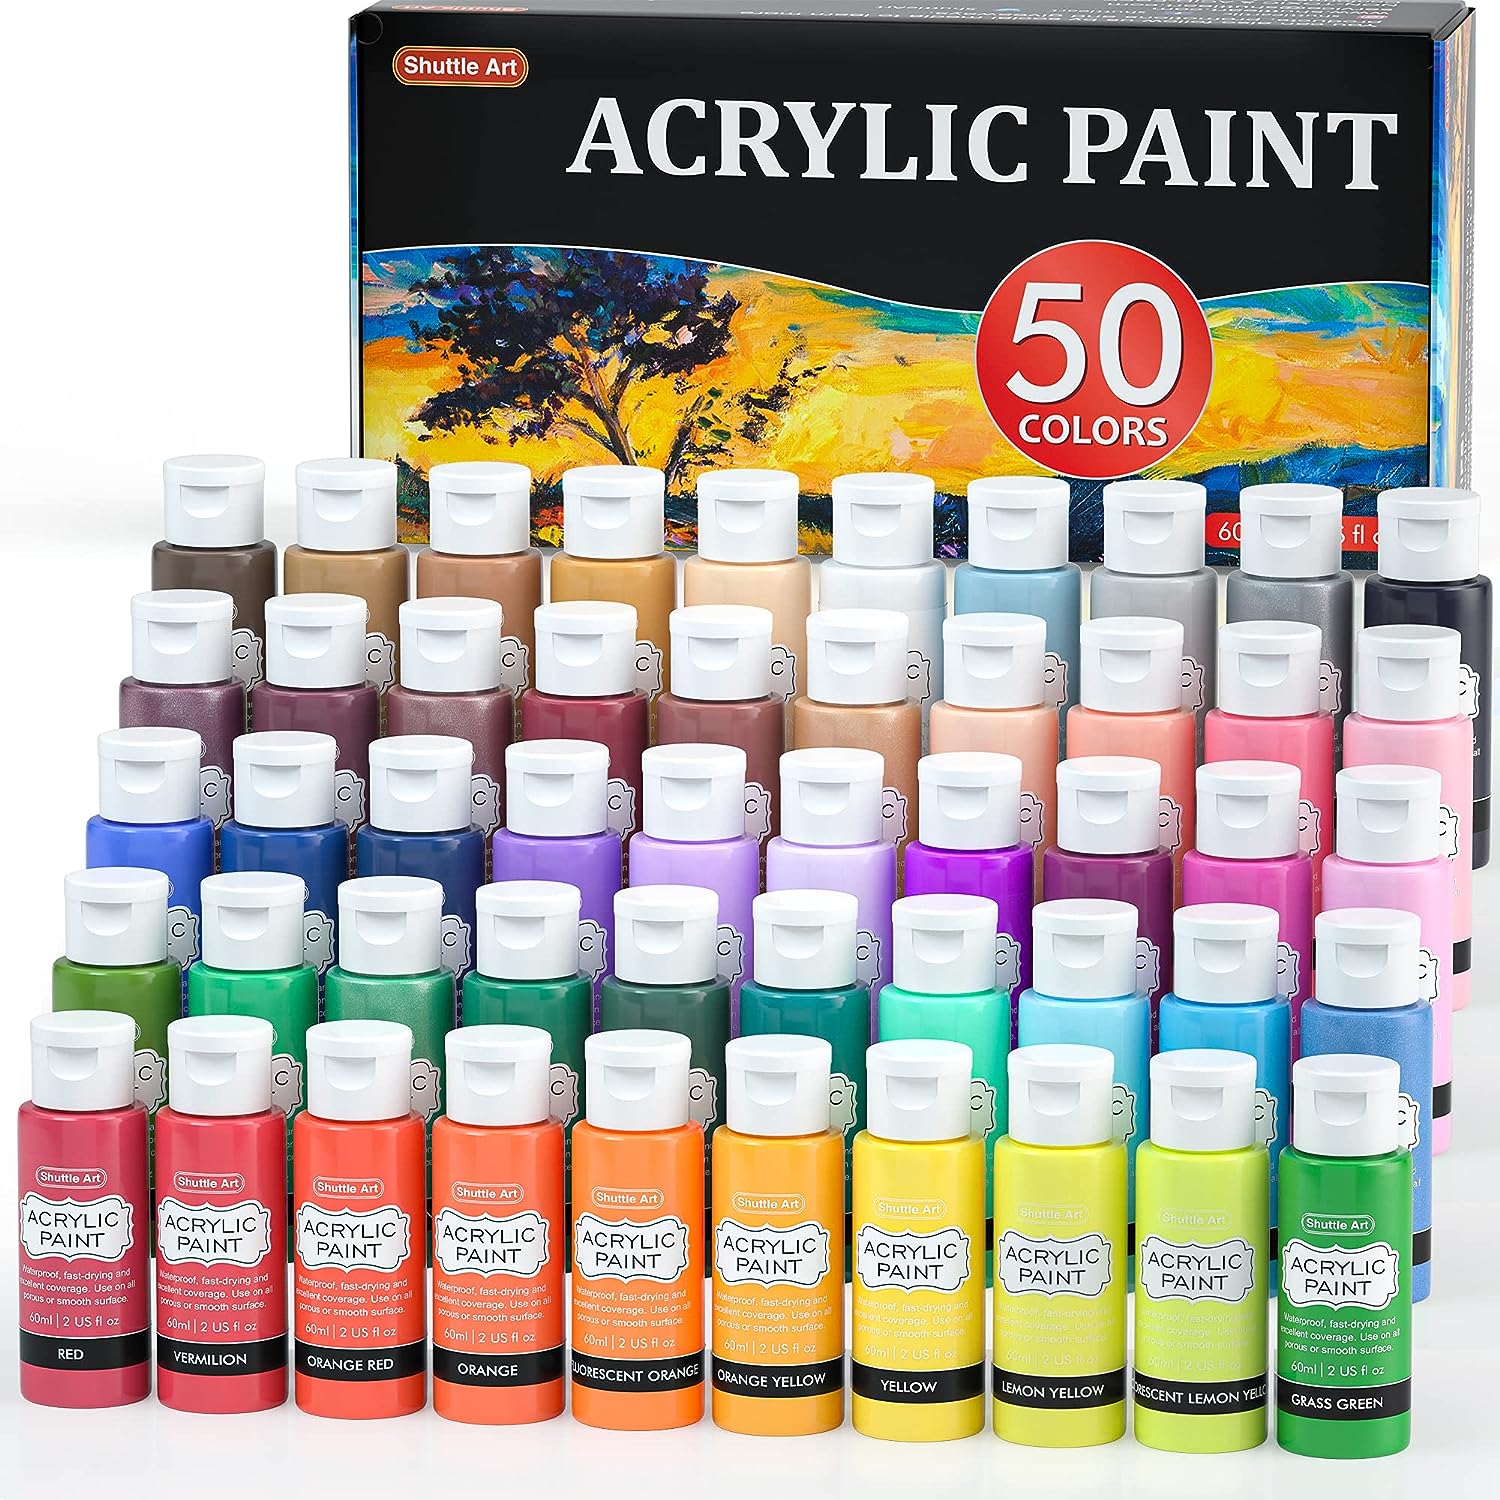 Shuttle Art Acrylic Paint, 50 Colors Acrylic Paint [...]